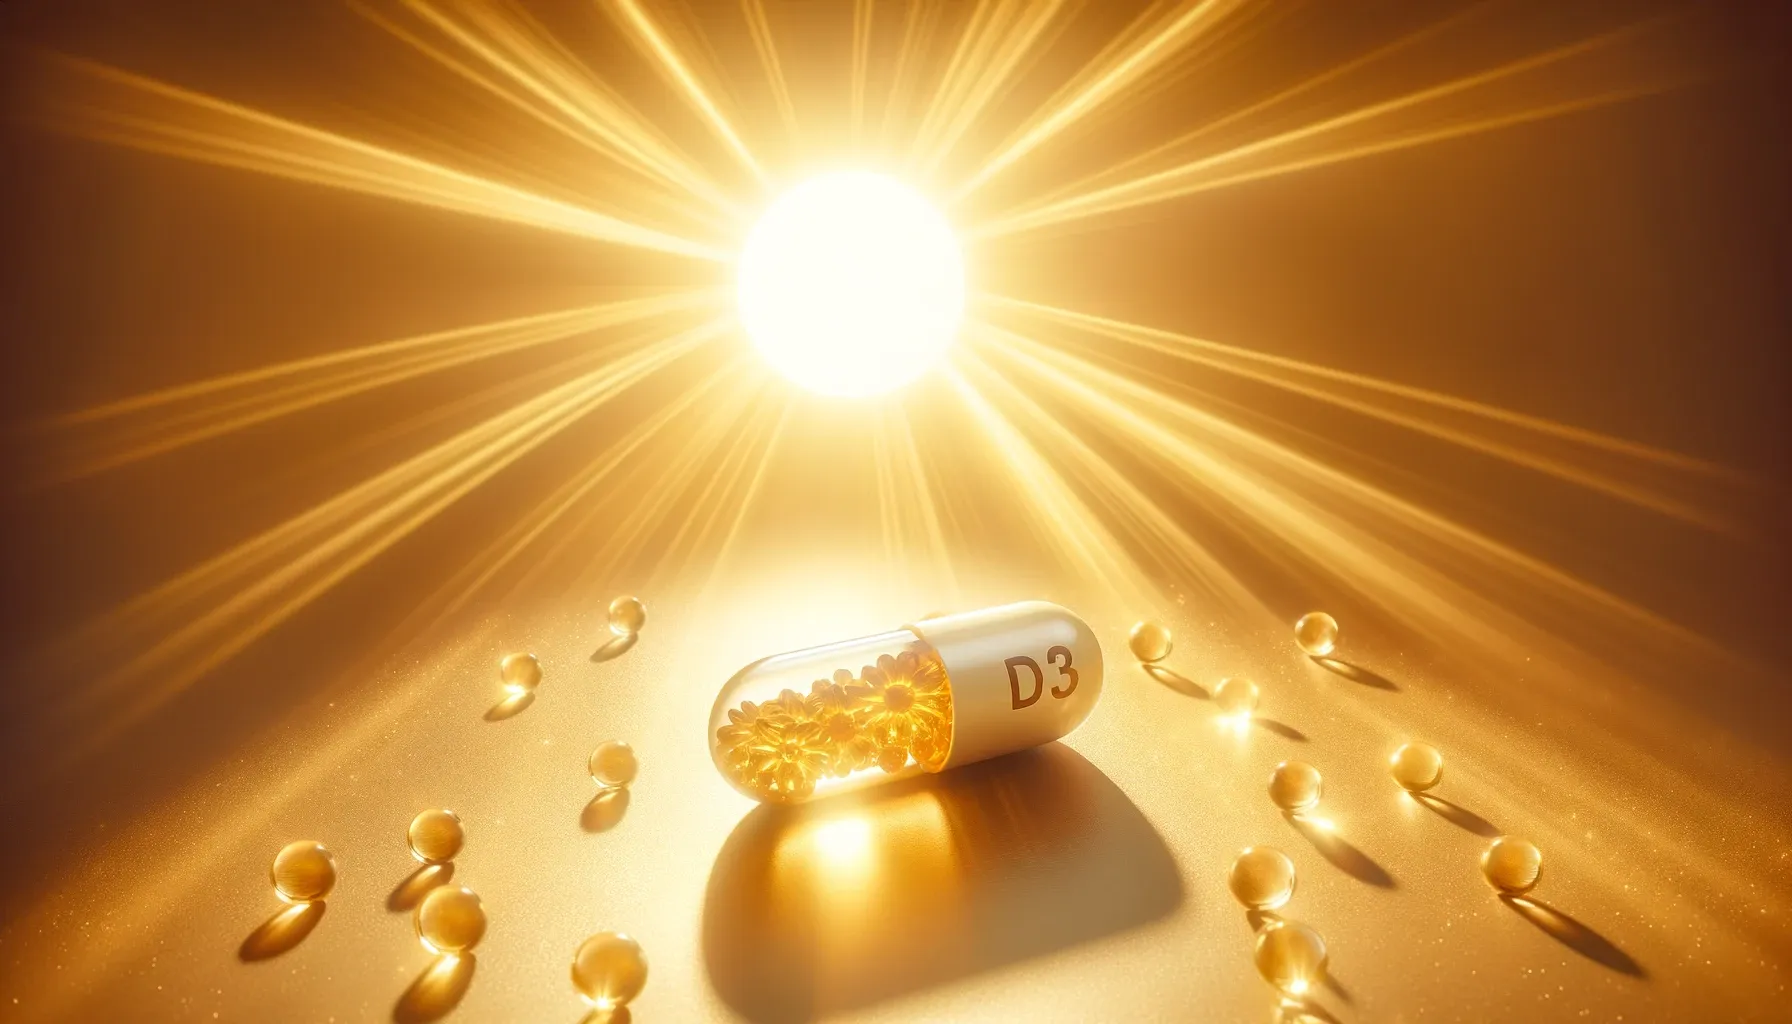 Sunlight shining on vitamin D3 capsule.